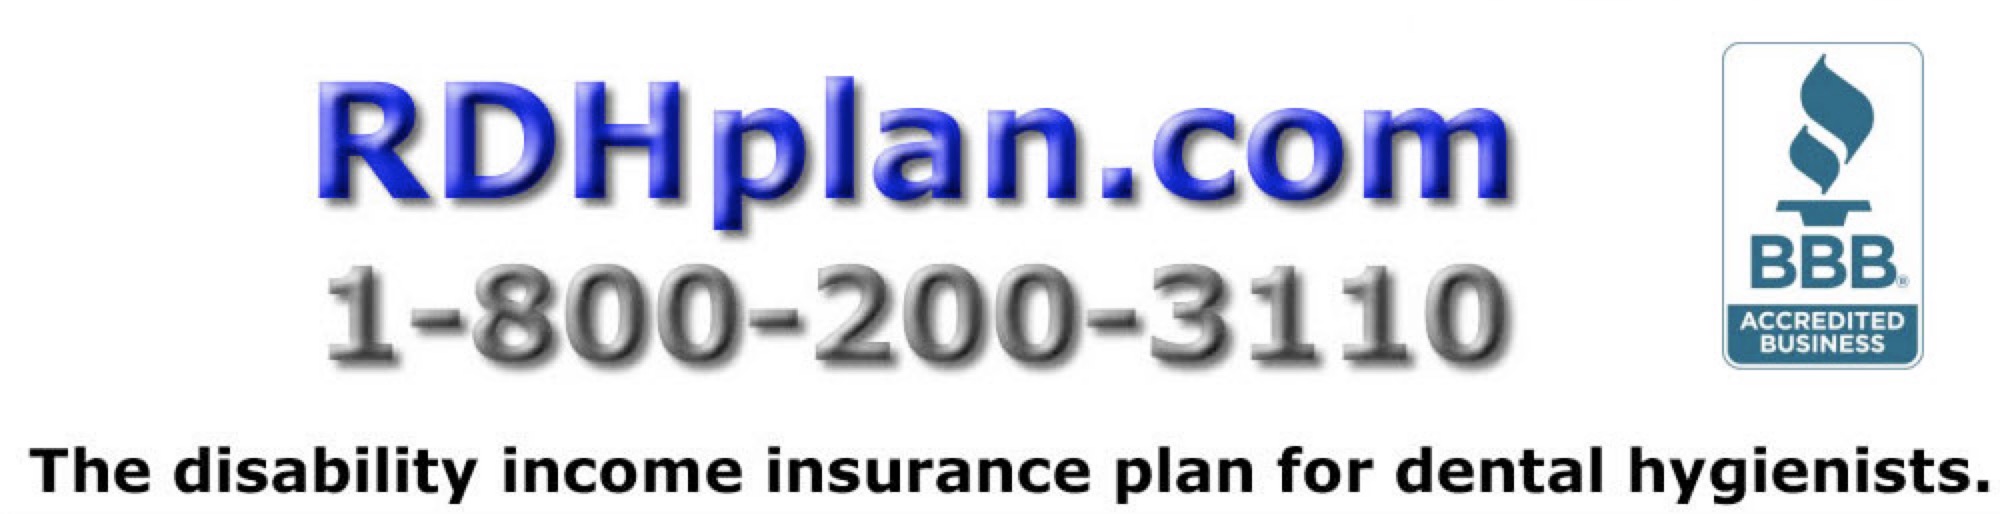 Dental Hygienist Disability Income Insurance Plan Logo